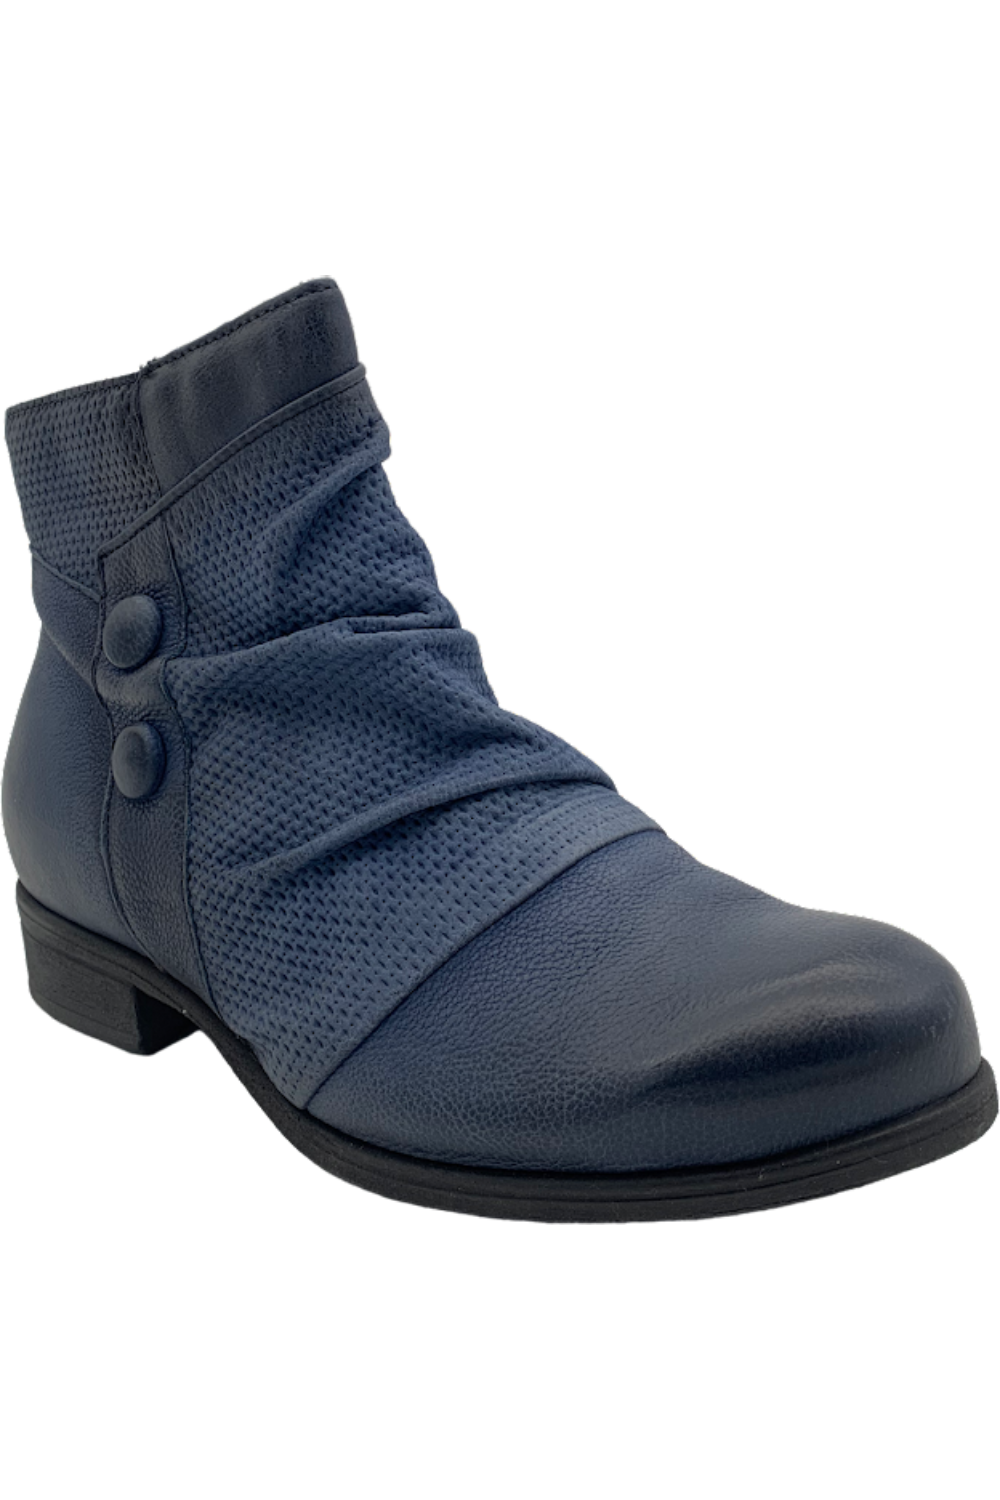 Miz Mooz Nesey boot-river — Centro Shoes, Inc.